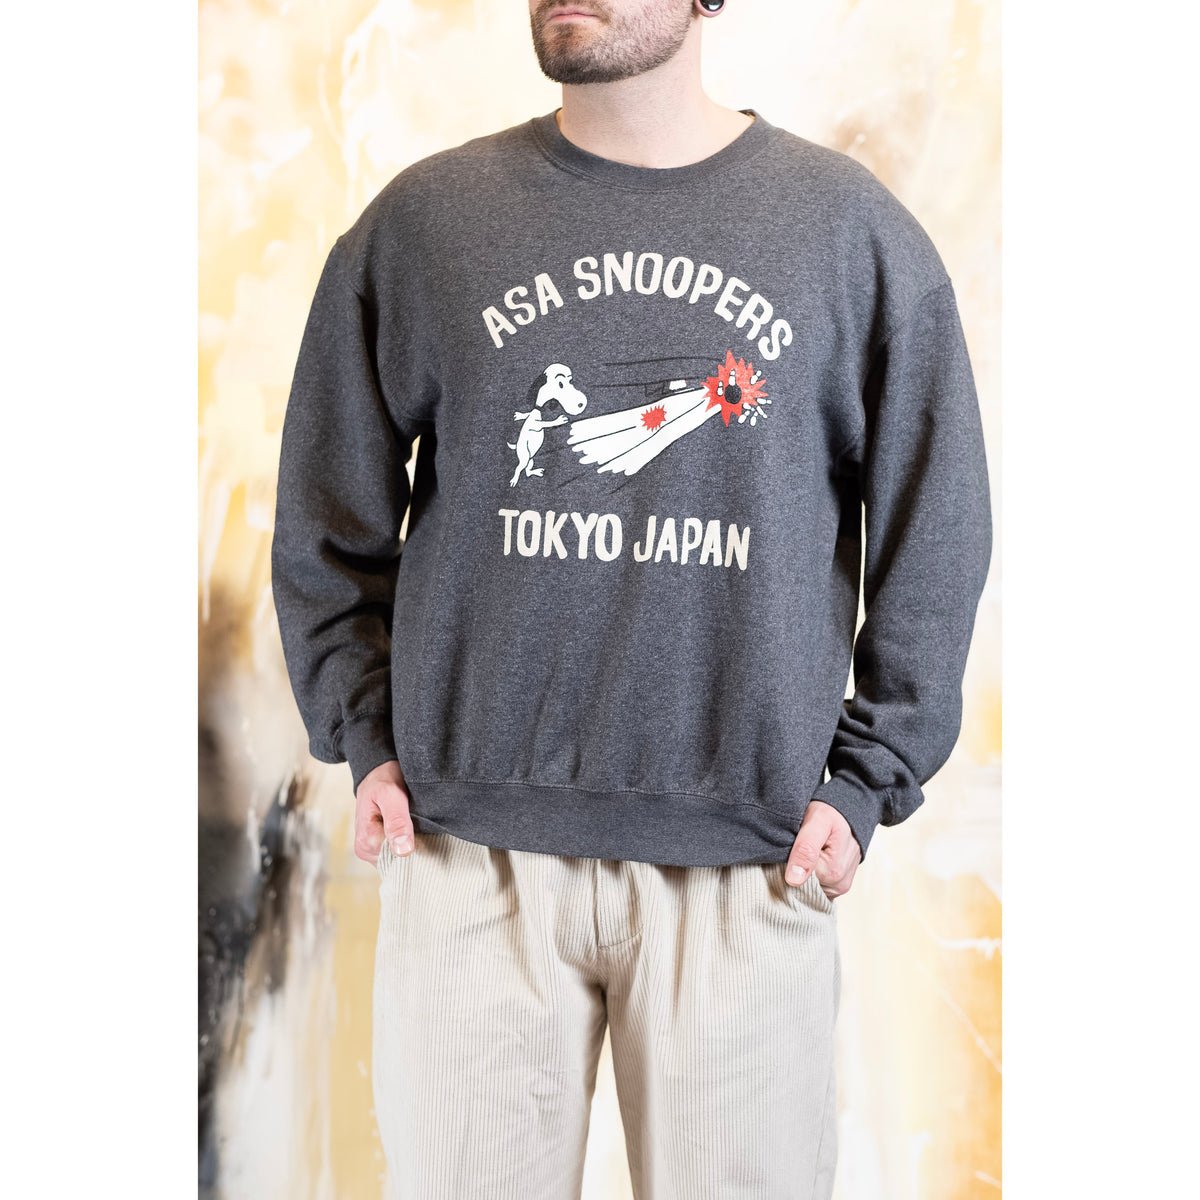 Wild Donkey Japan Vintage Style Sweatshirt - Snoopy Snoopers Bowling (Grey)